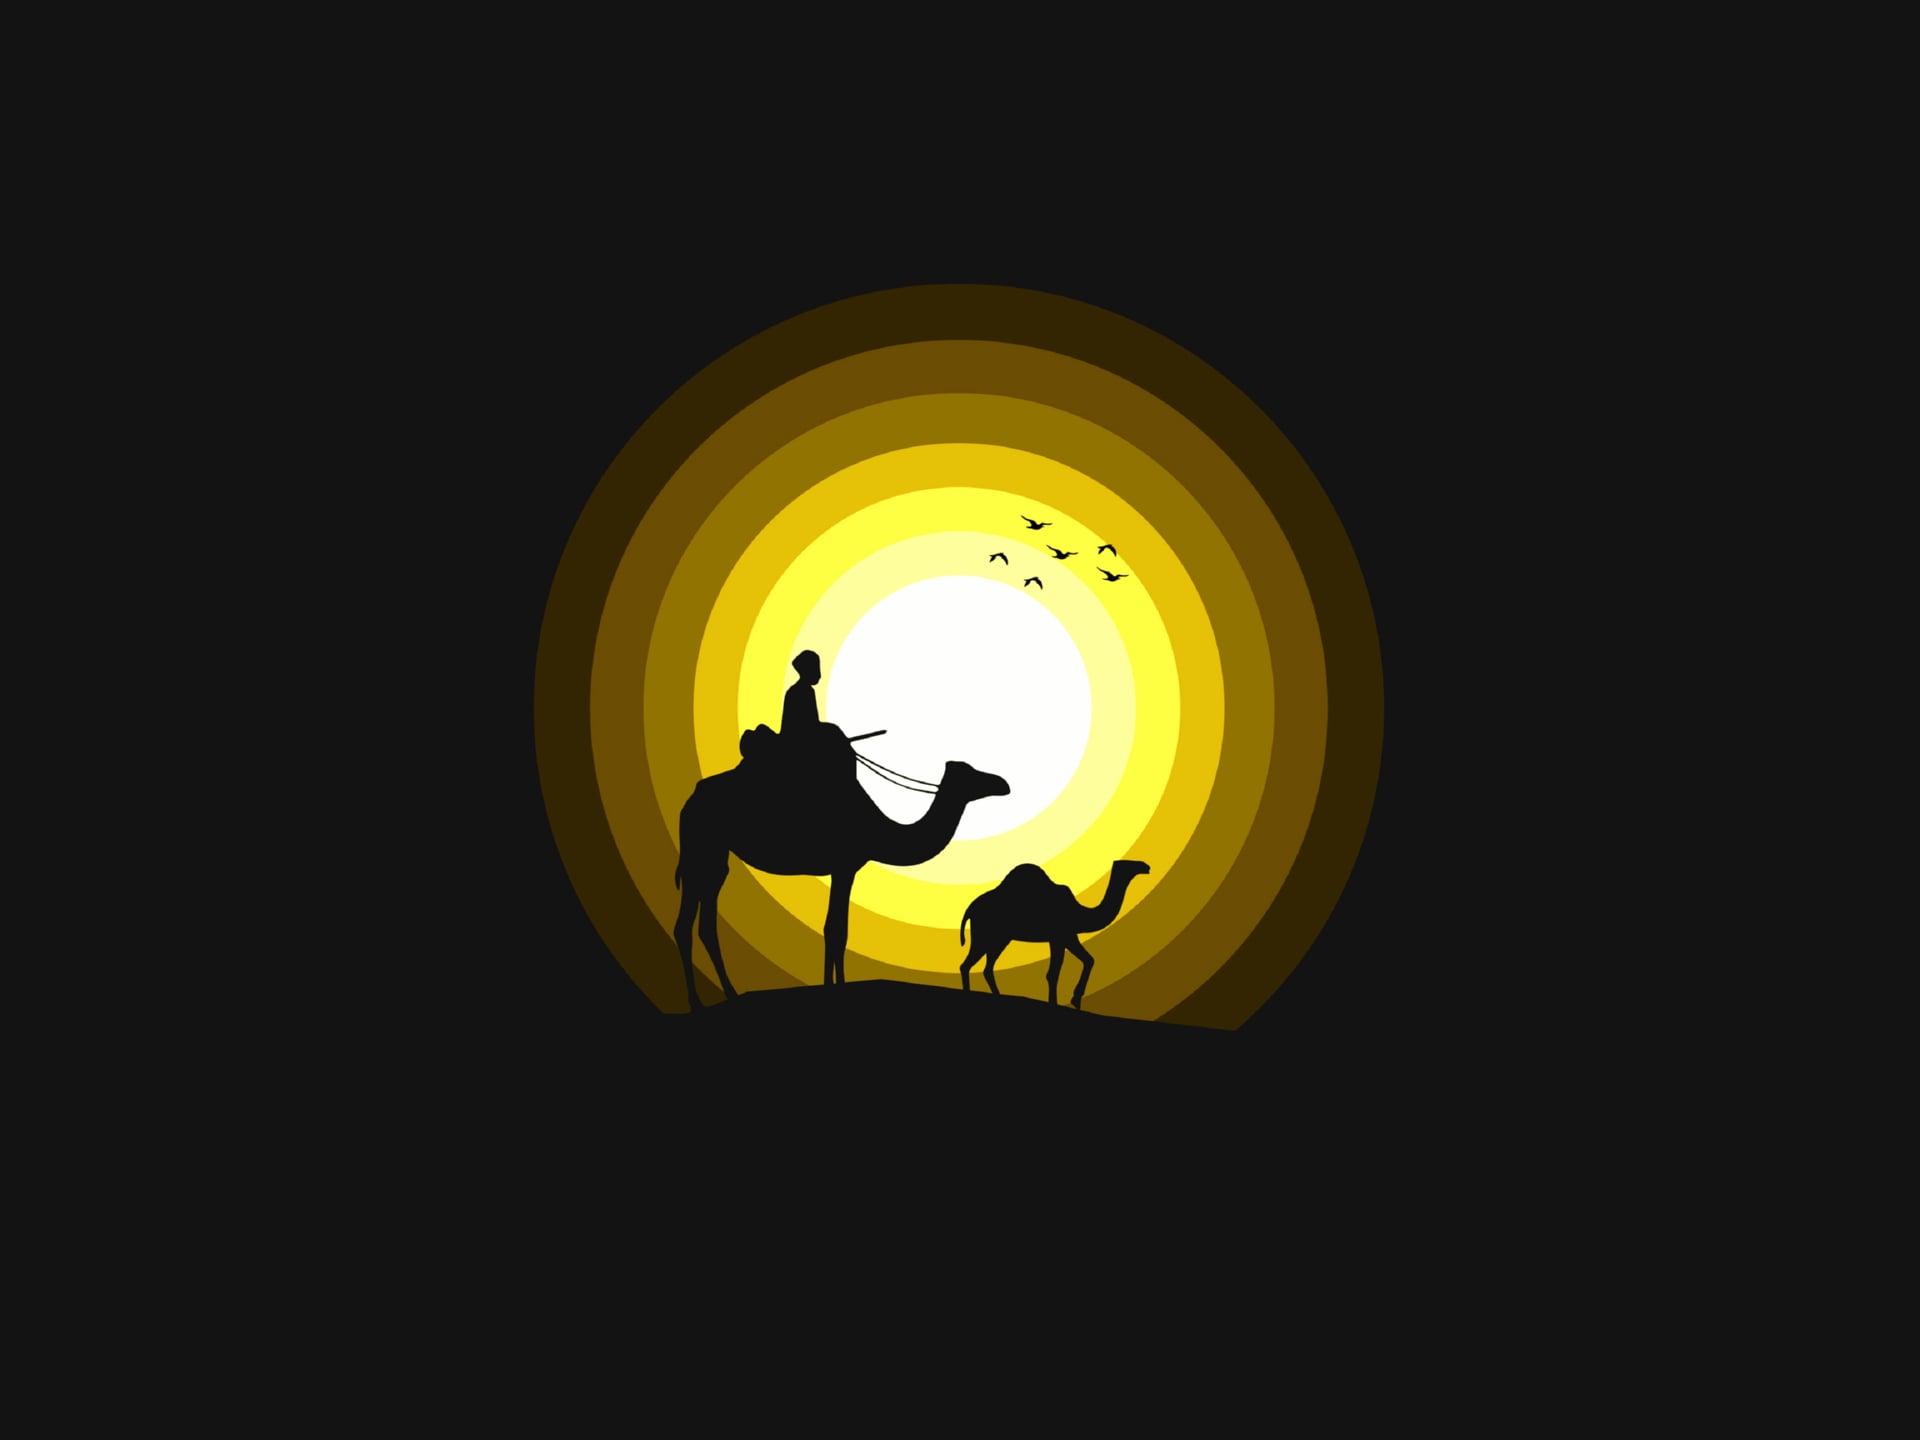 Digital Art Camels wallpapers HD quality